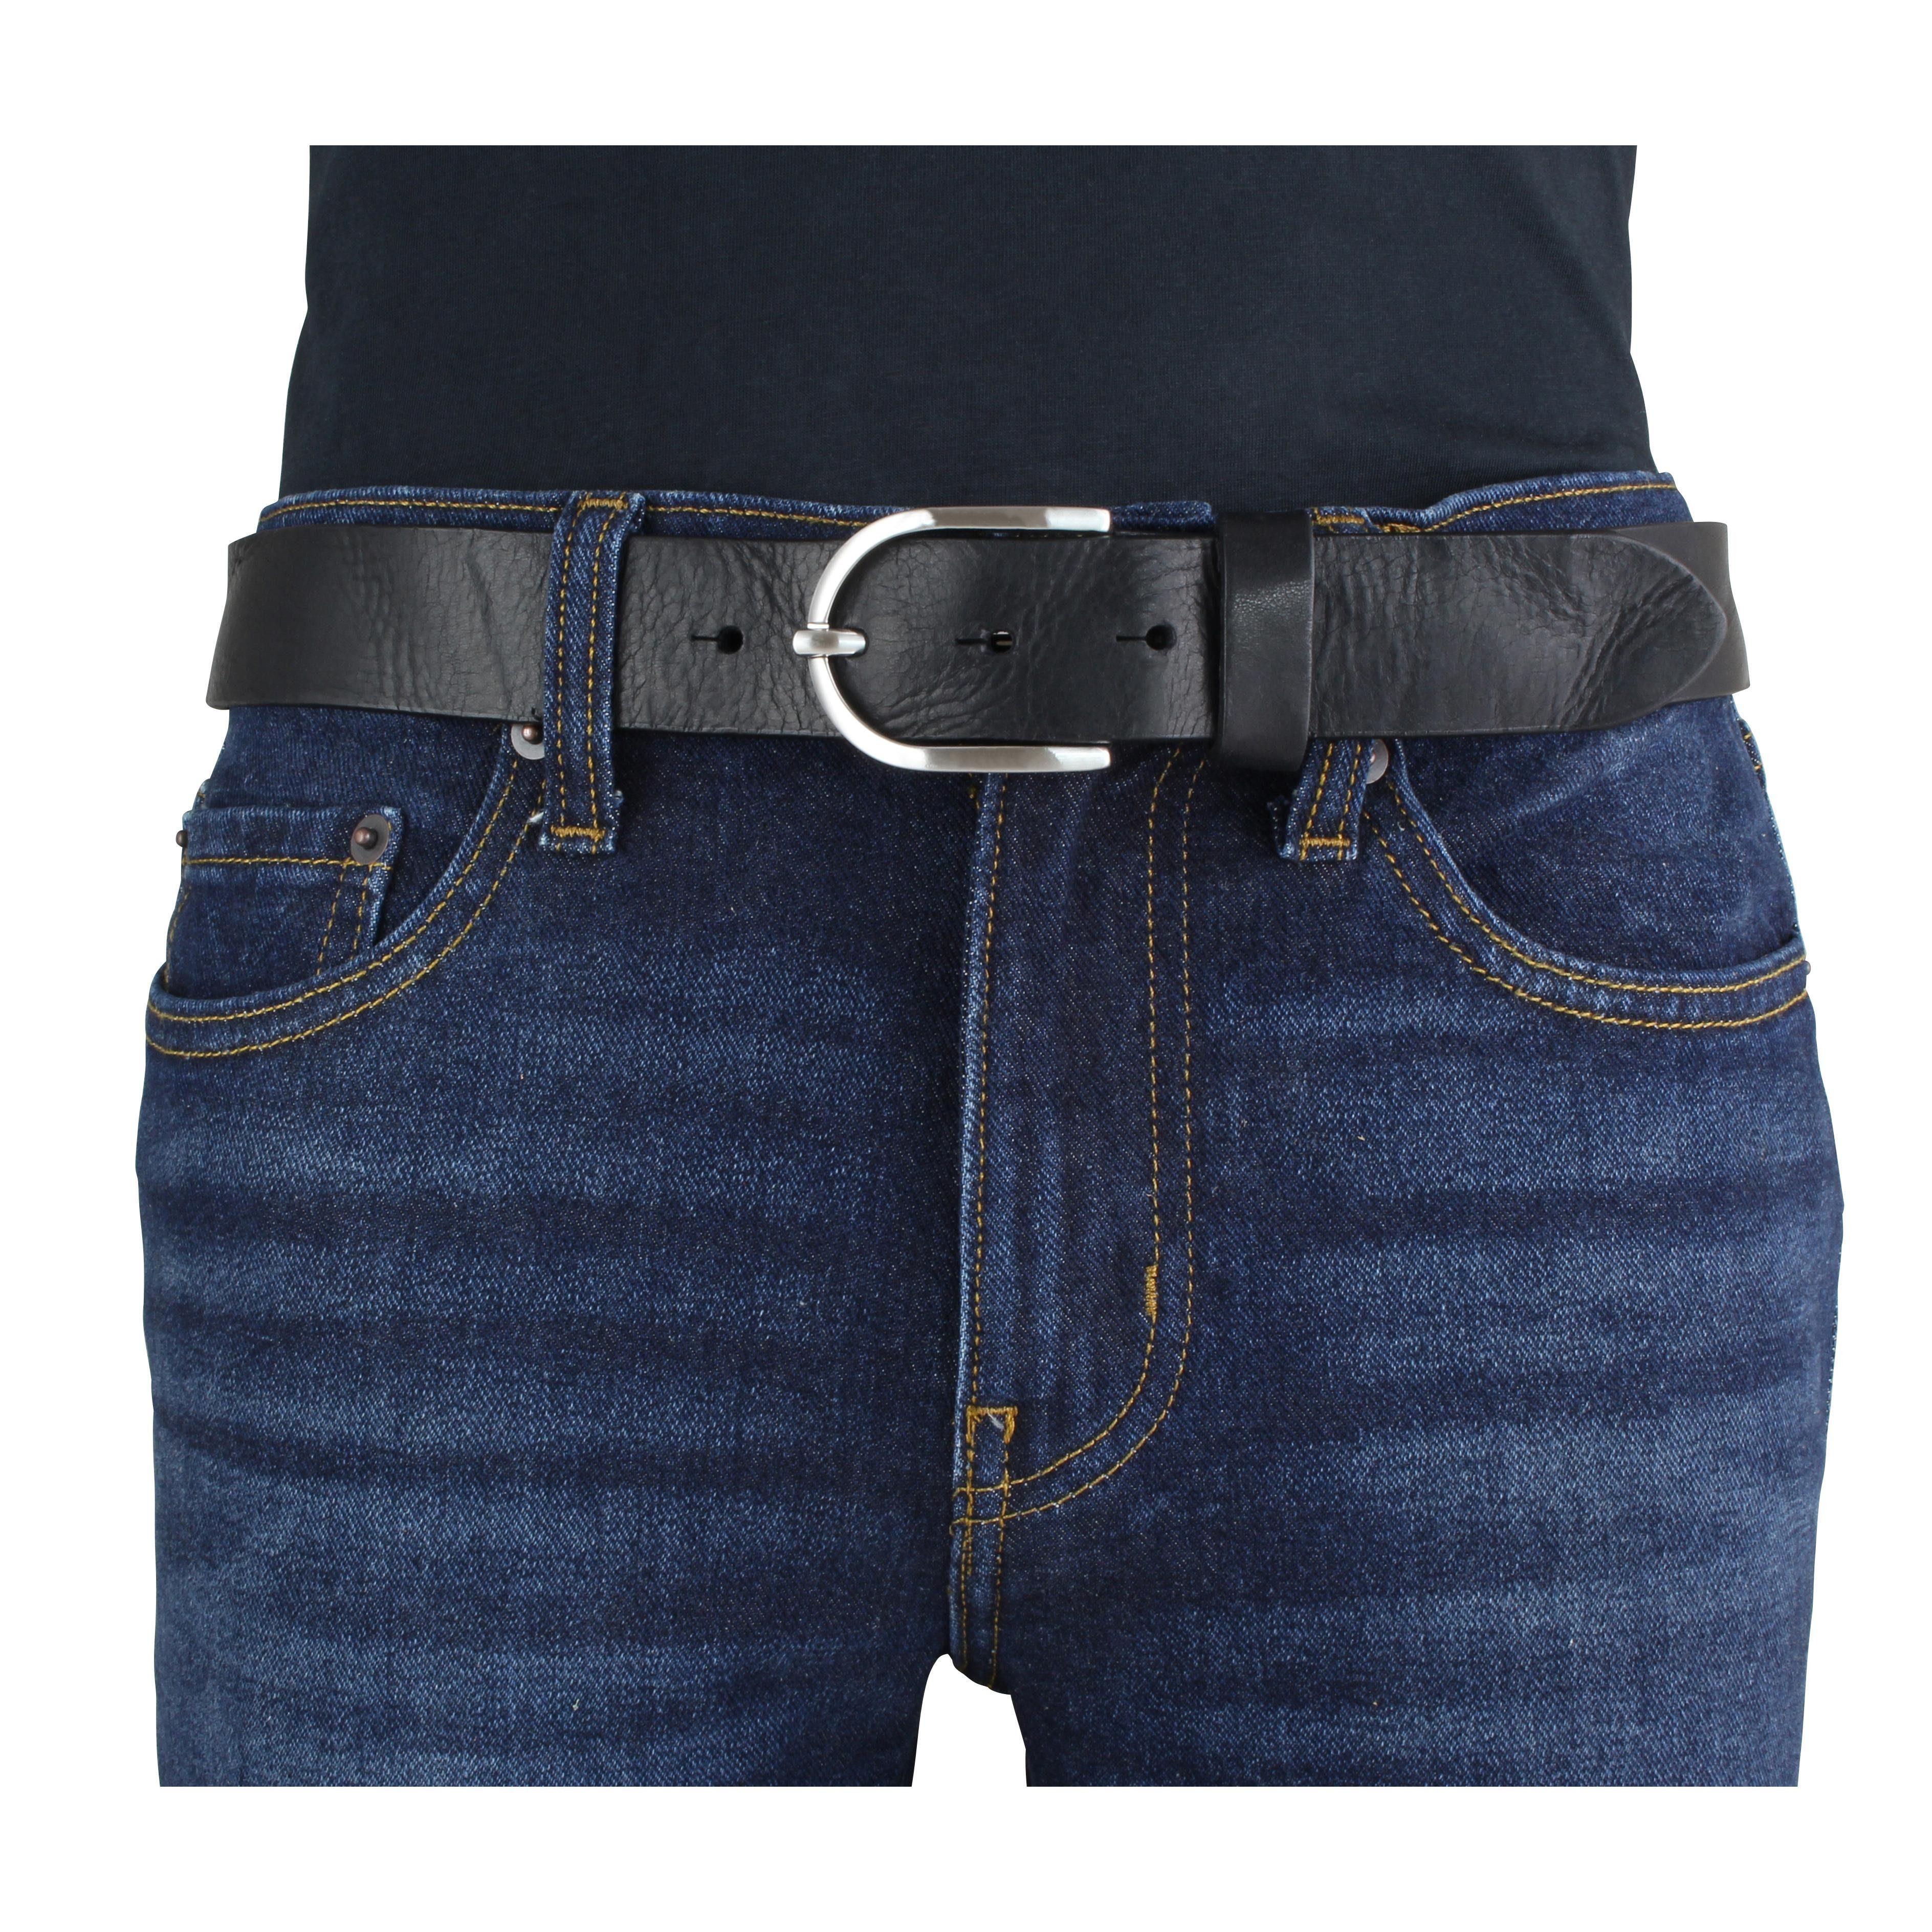 3,5 Used-Look - Damen-Gürtel Jeans-Gürtel cm aus BELTINGER Ledergürtel für Dam Rot, Silber Vollrindleder